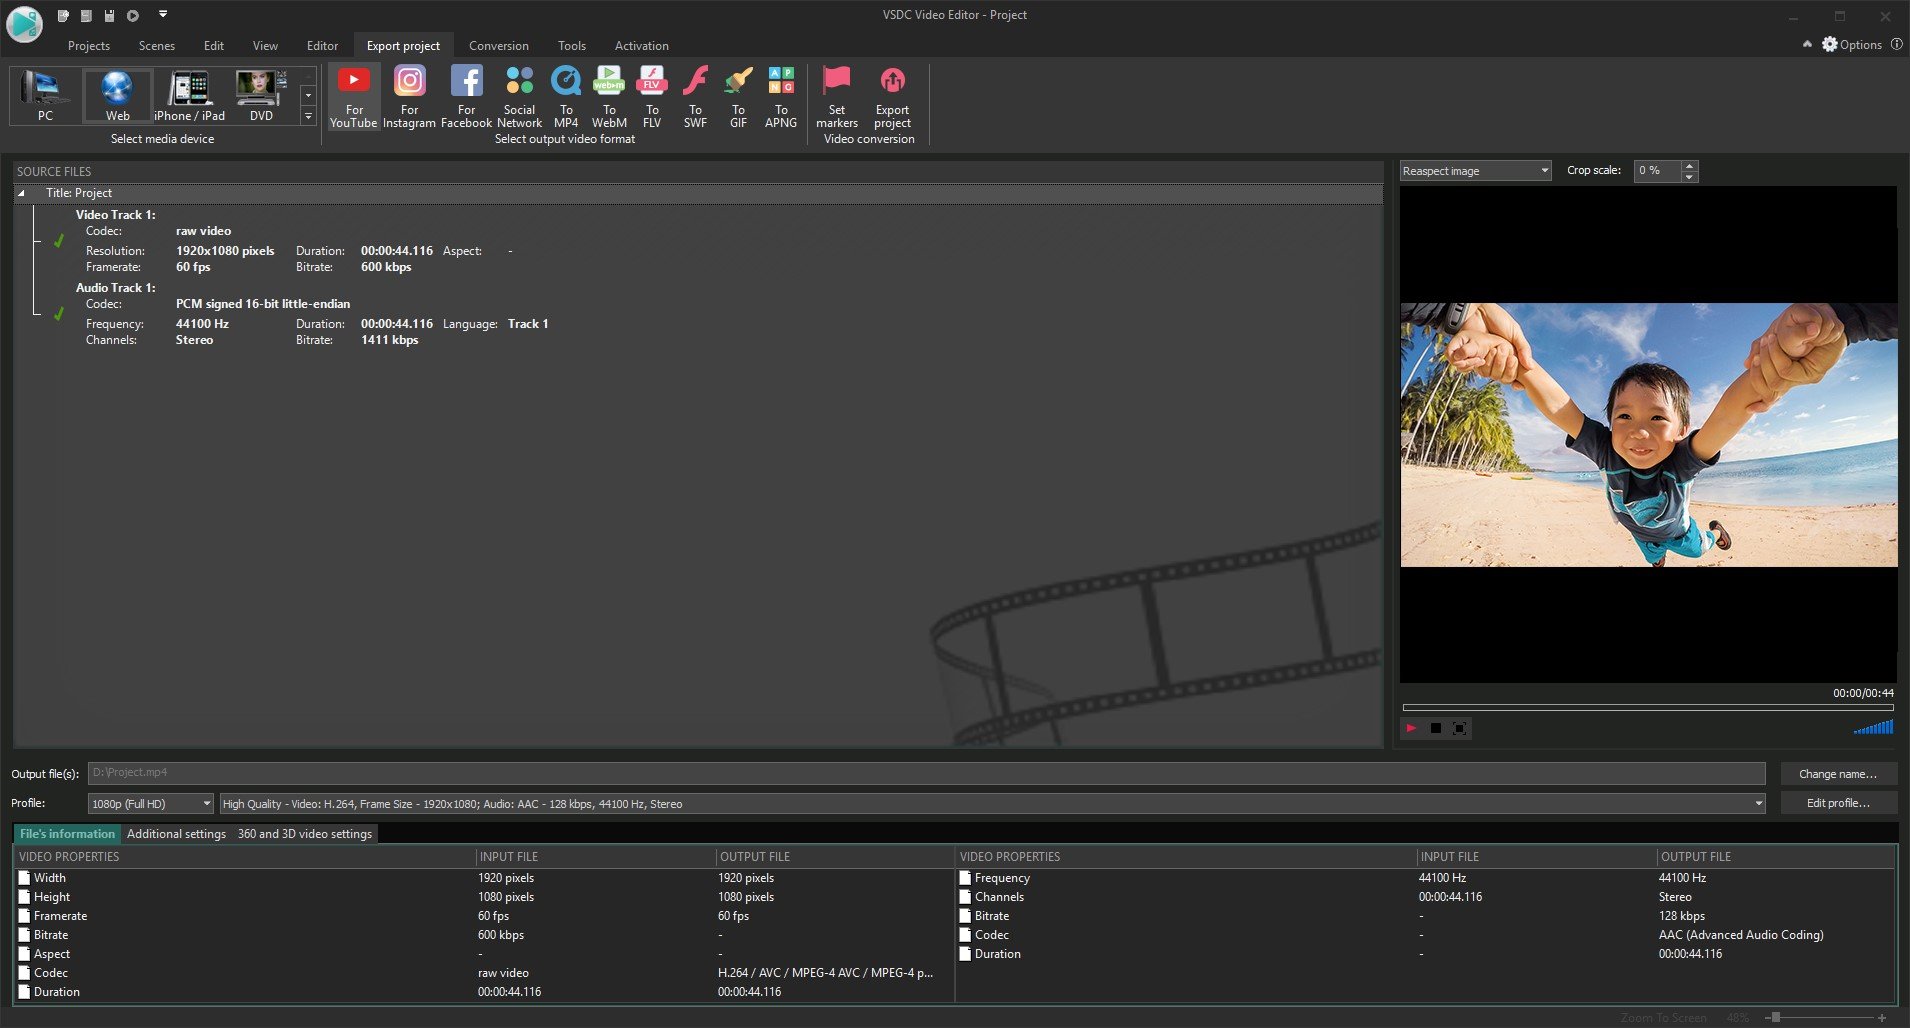 Vsdc free video editor